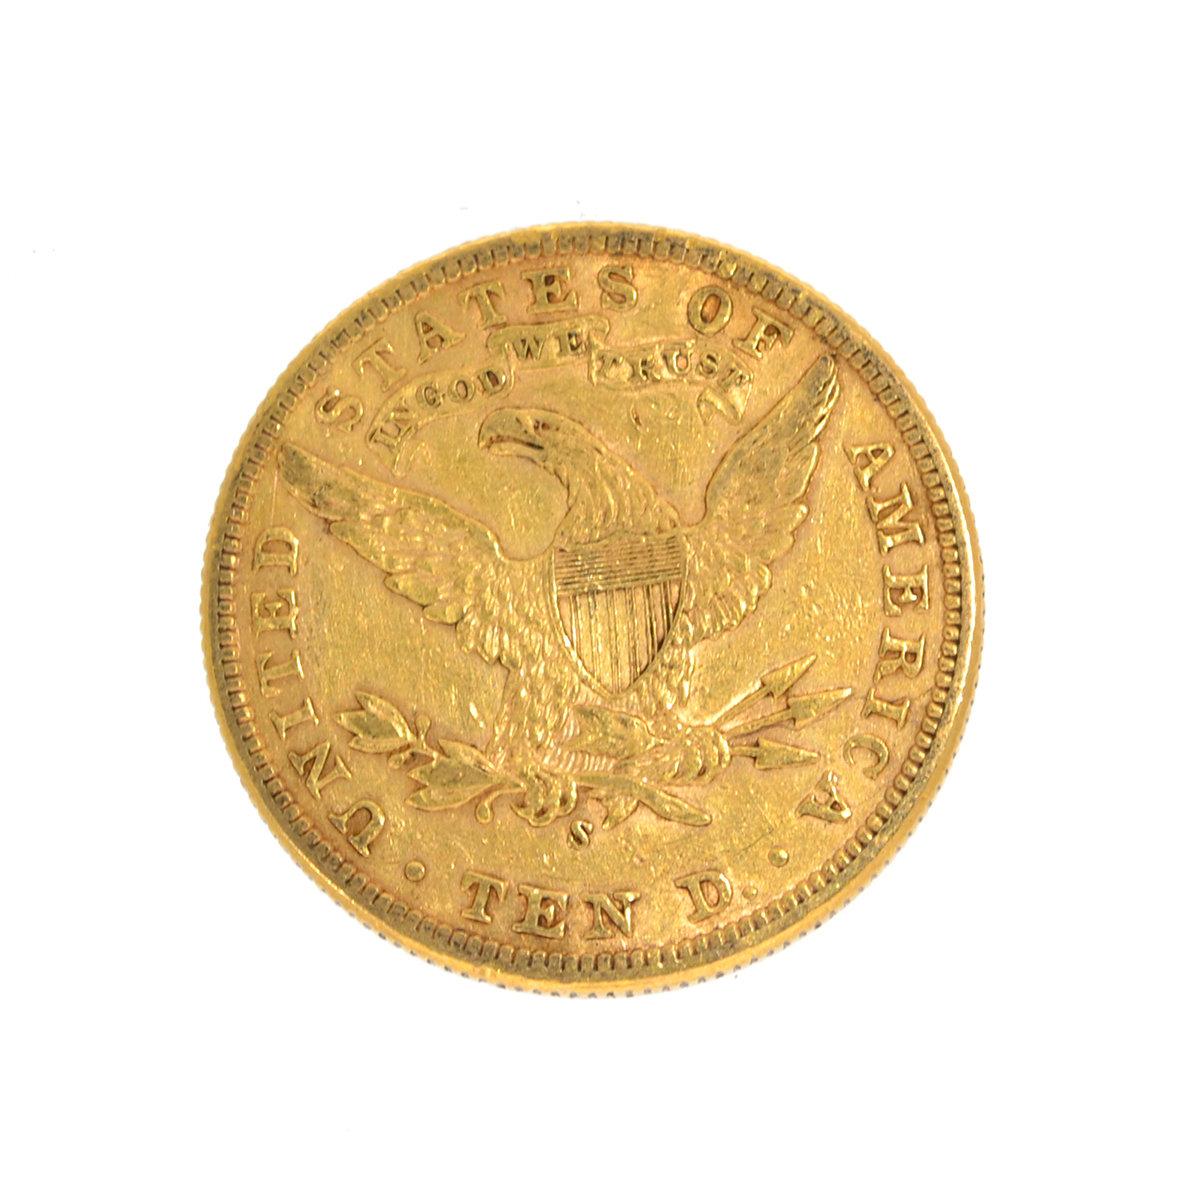 *1907-S $10 U.S. Liberty Head Gold Coin (DF)